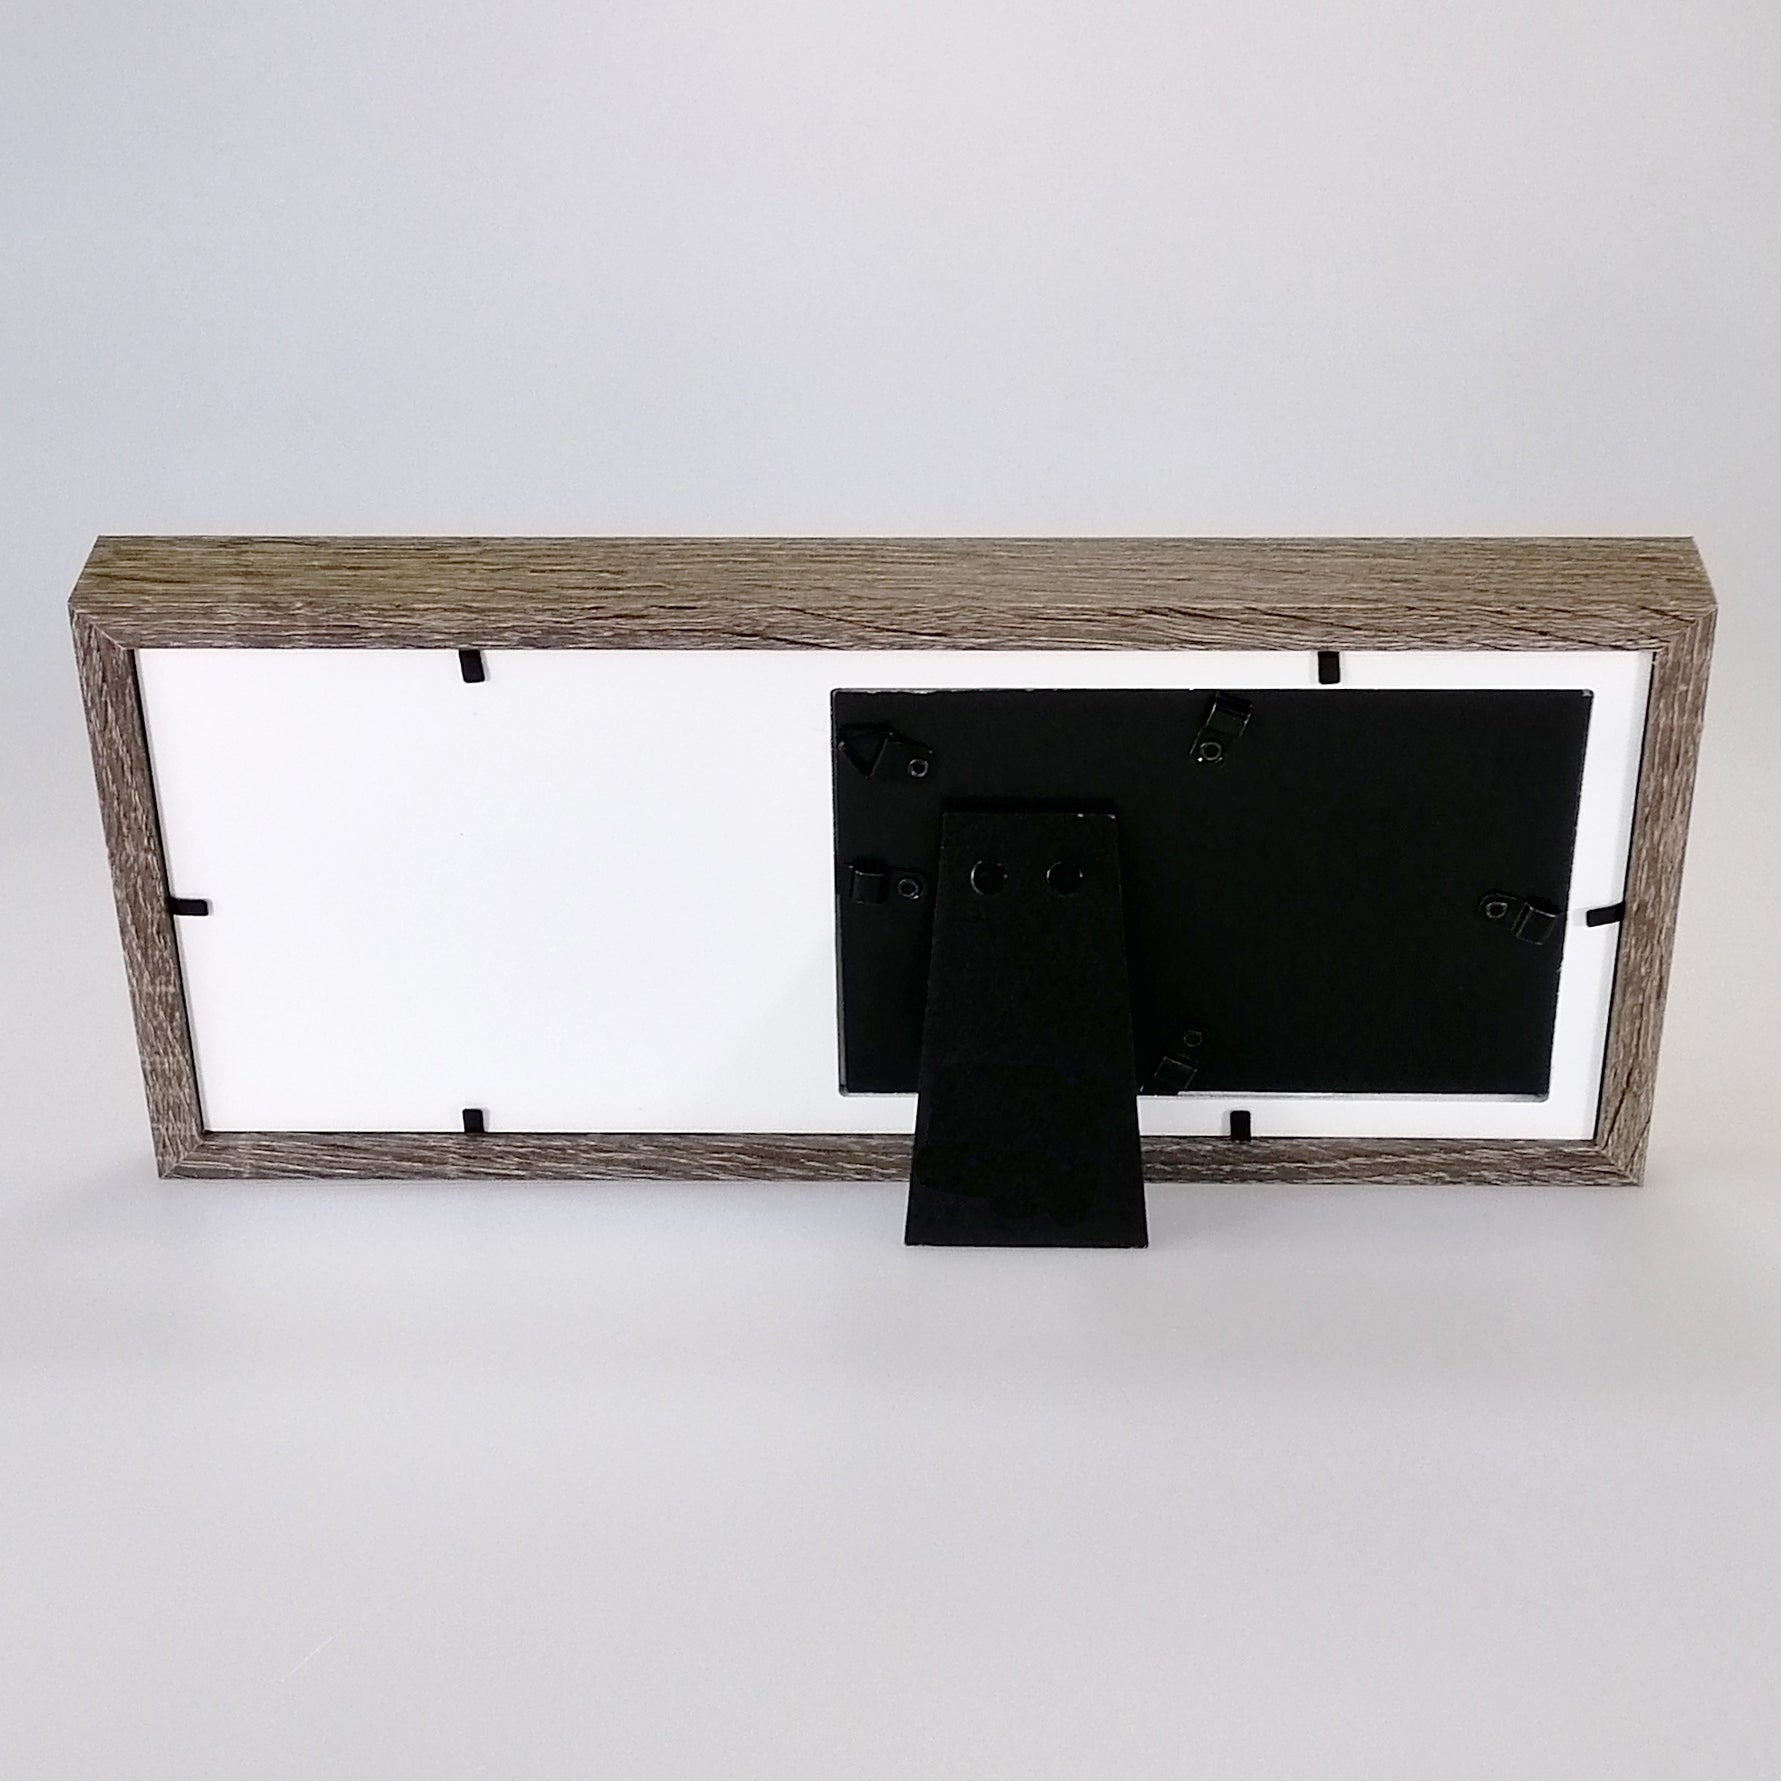 Wood-Look Sentimental Frame - Mum 4"x6"